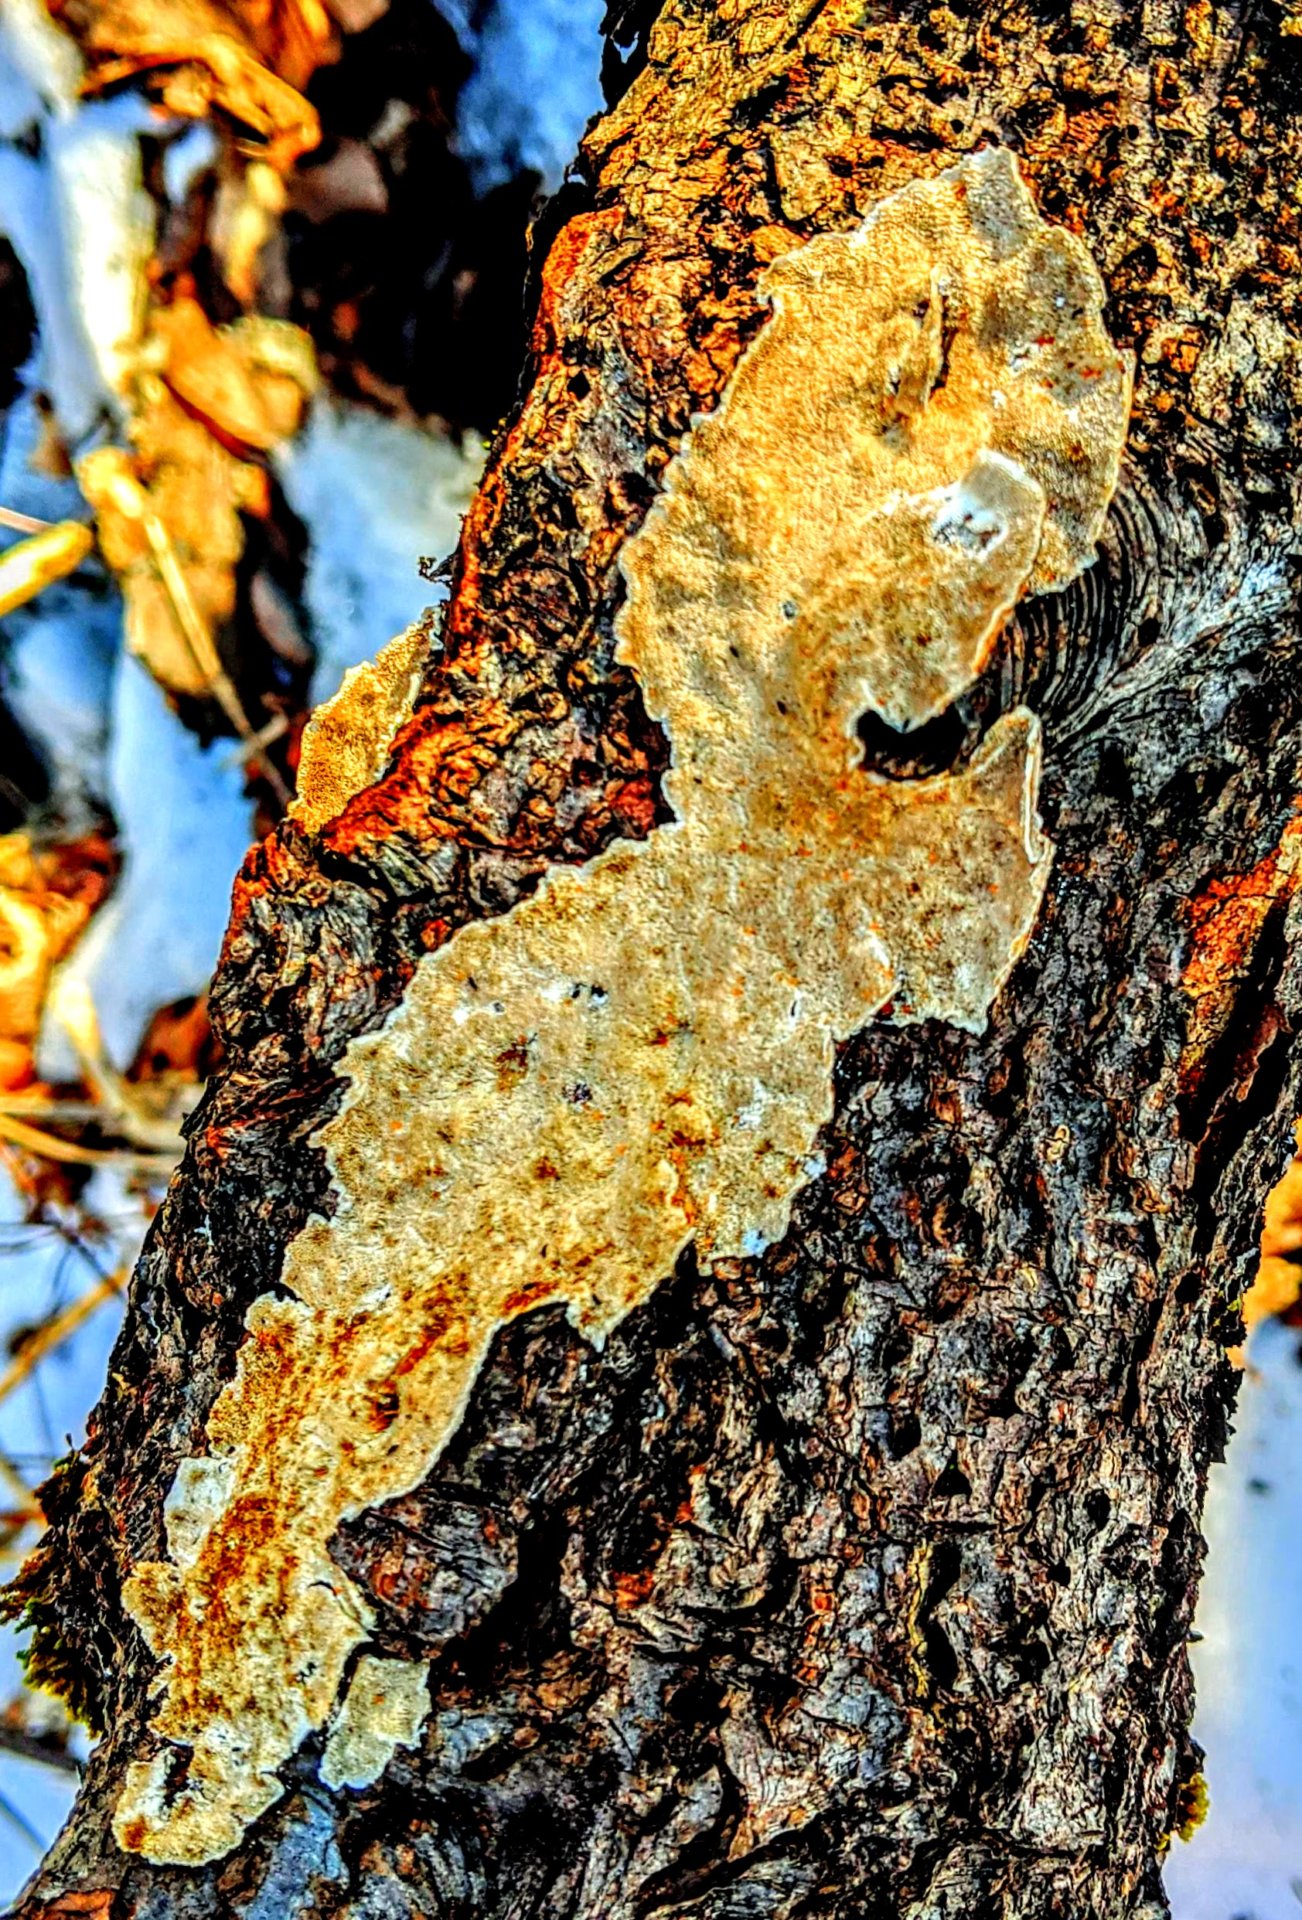 cream, flat mushrooms growing on a dead tree in downeast, Maine.